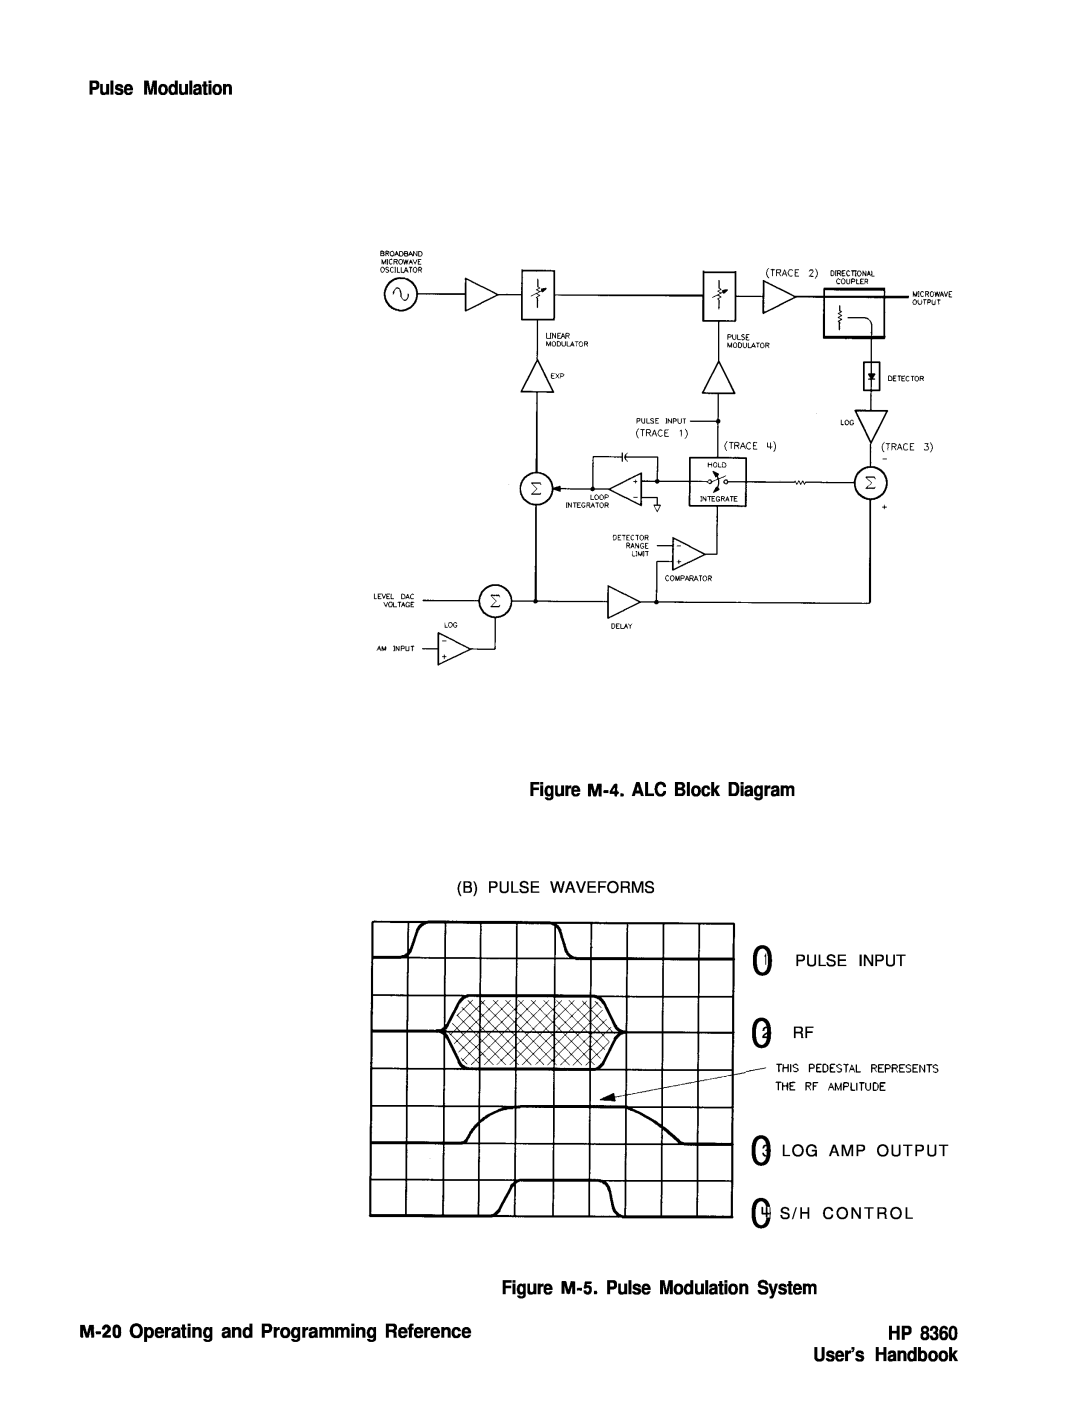 HP 22A Pulse Modulation Figure M-4. ALC Block Diagram, Figure M-5. Pulse Modulation System, User’s Handbook, Input, This 